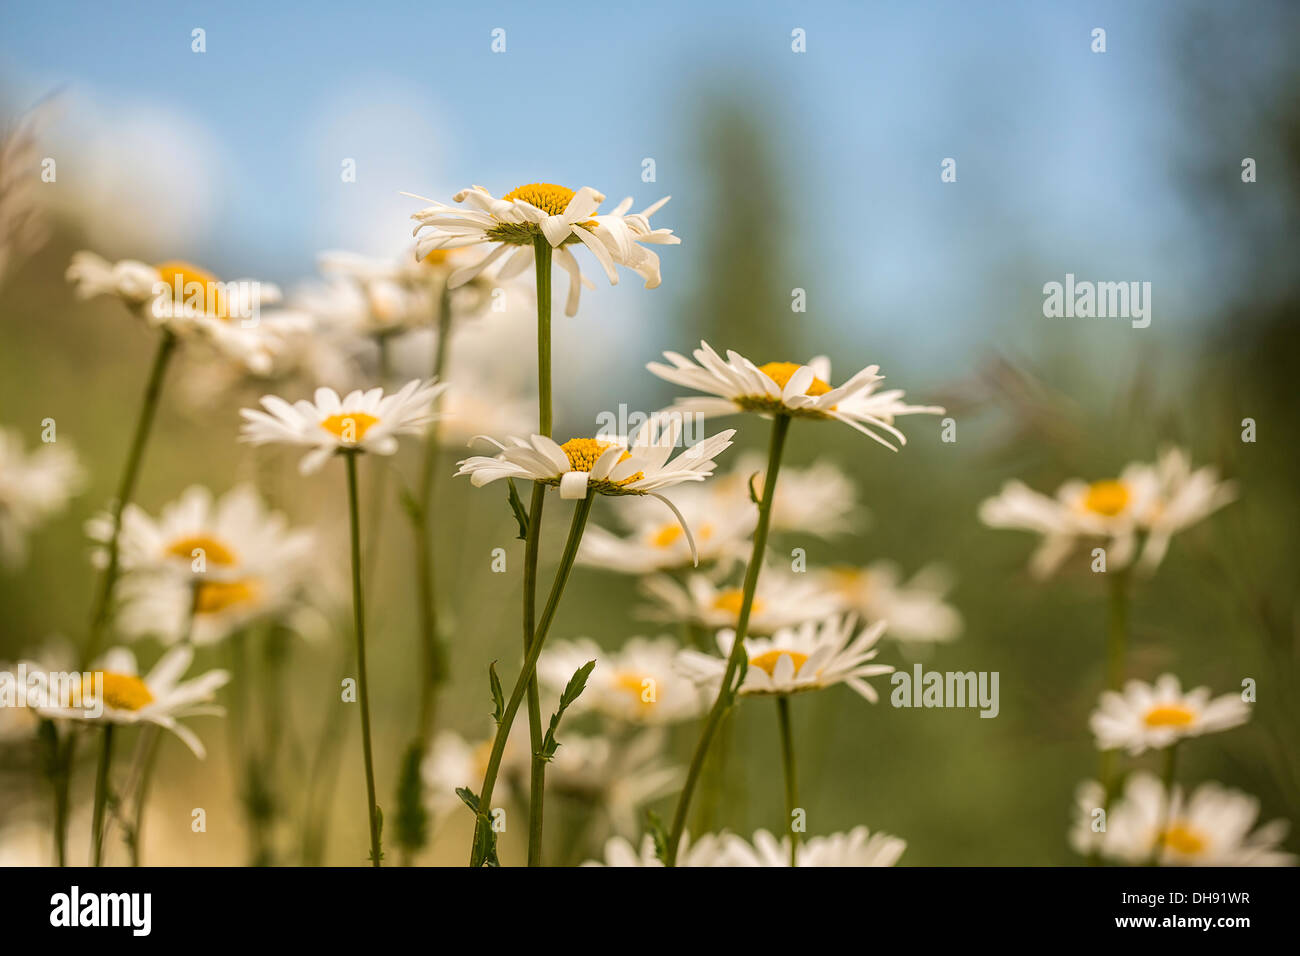 Ox-eye daisy, Leucanthemum vulgare. Group of Ox-eye daisies with white petals surrounding yellow centres. Stock Photo